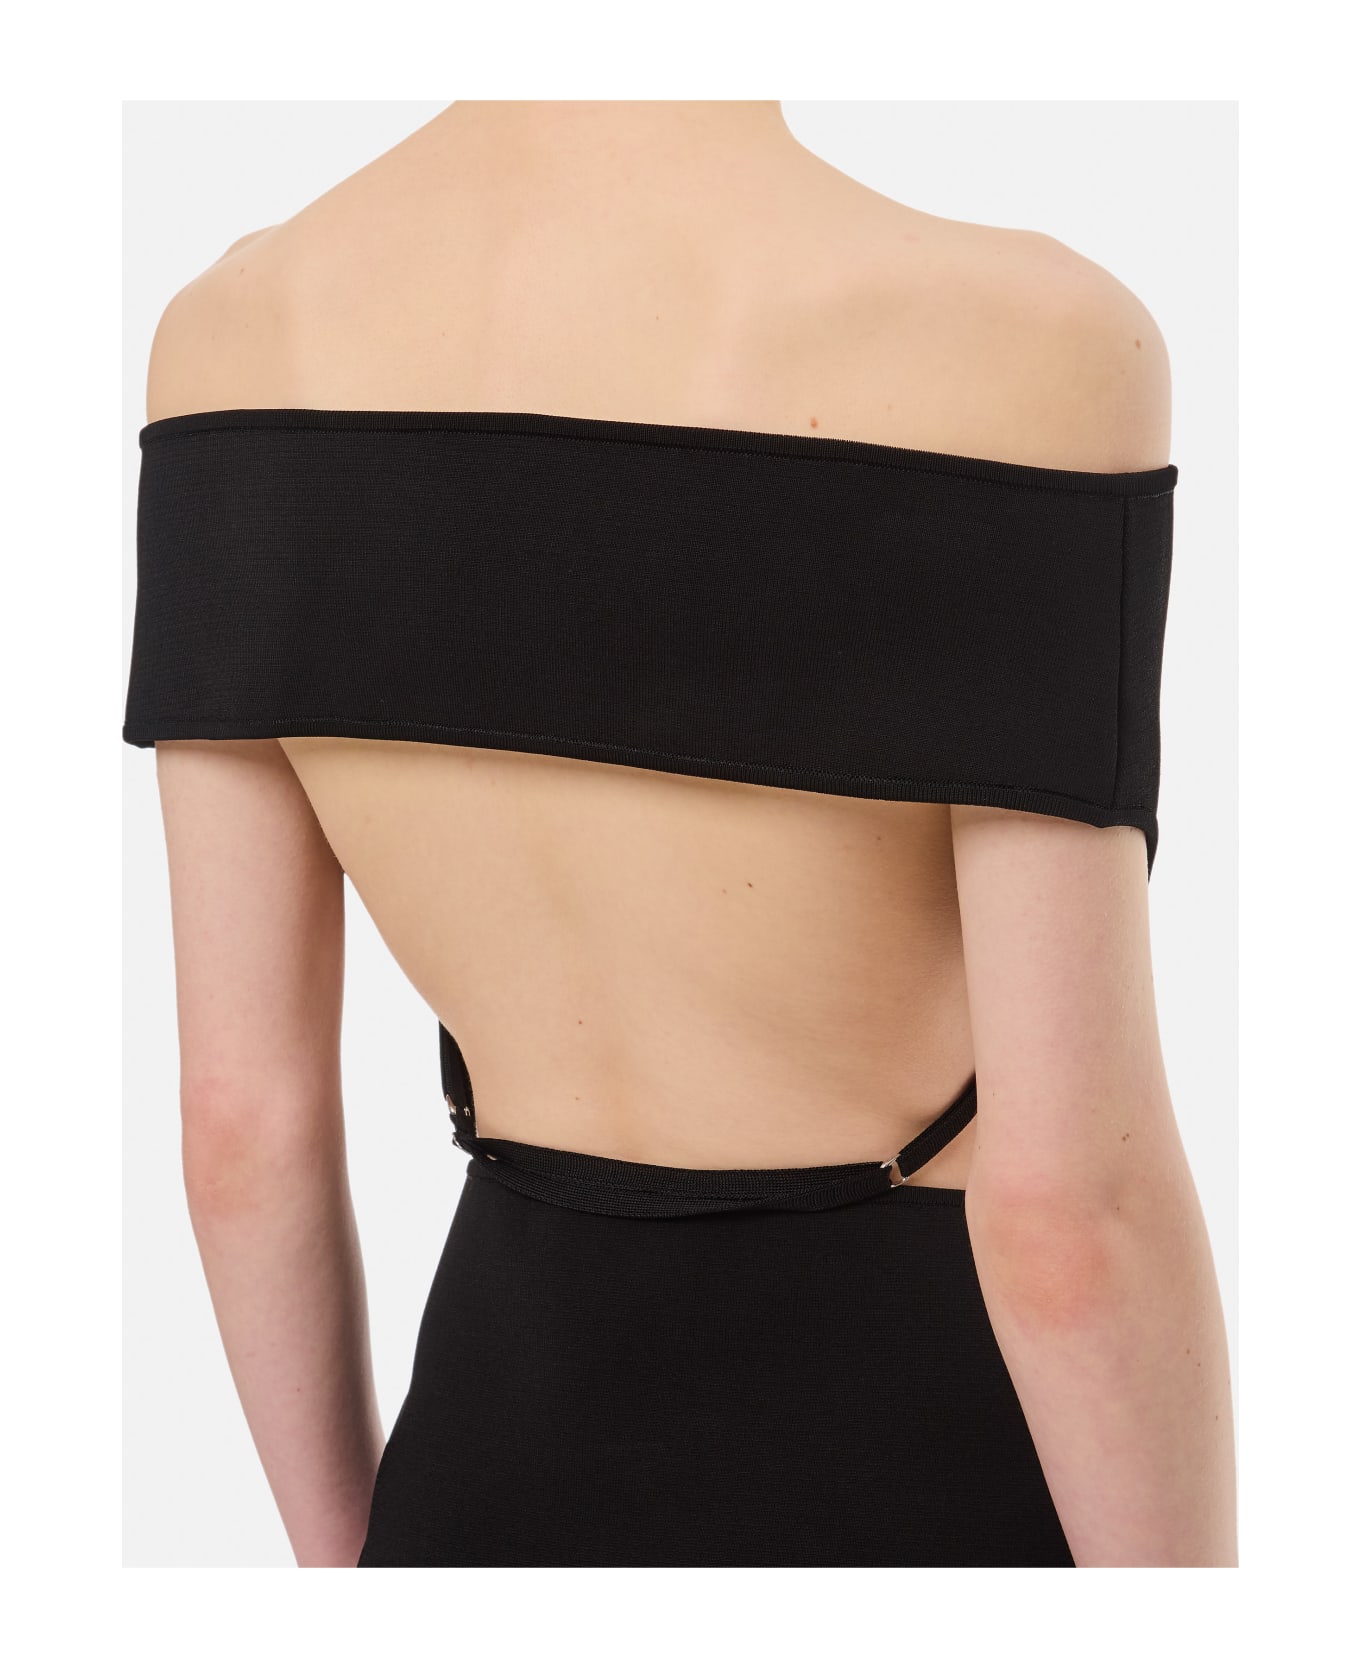 Jacquemus Off-the-shoulder Short Dress - Black